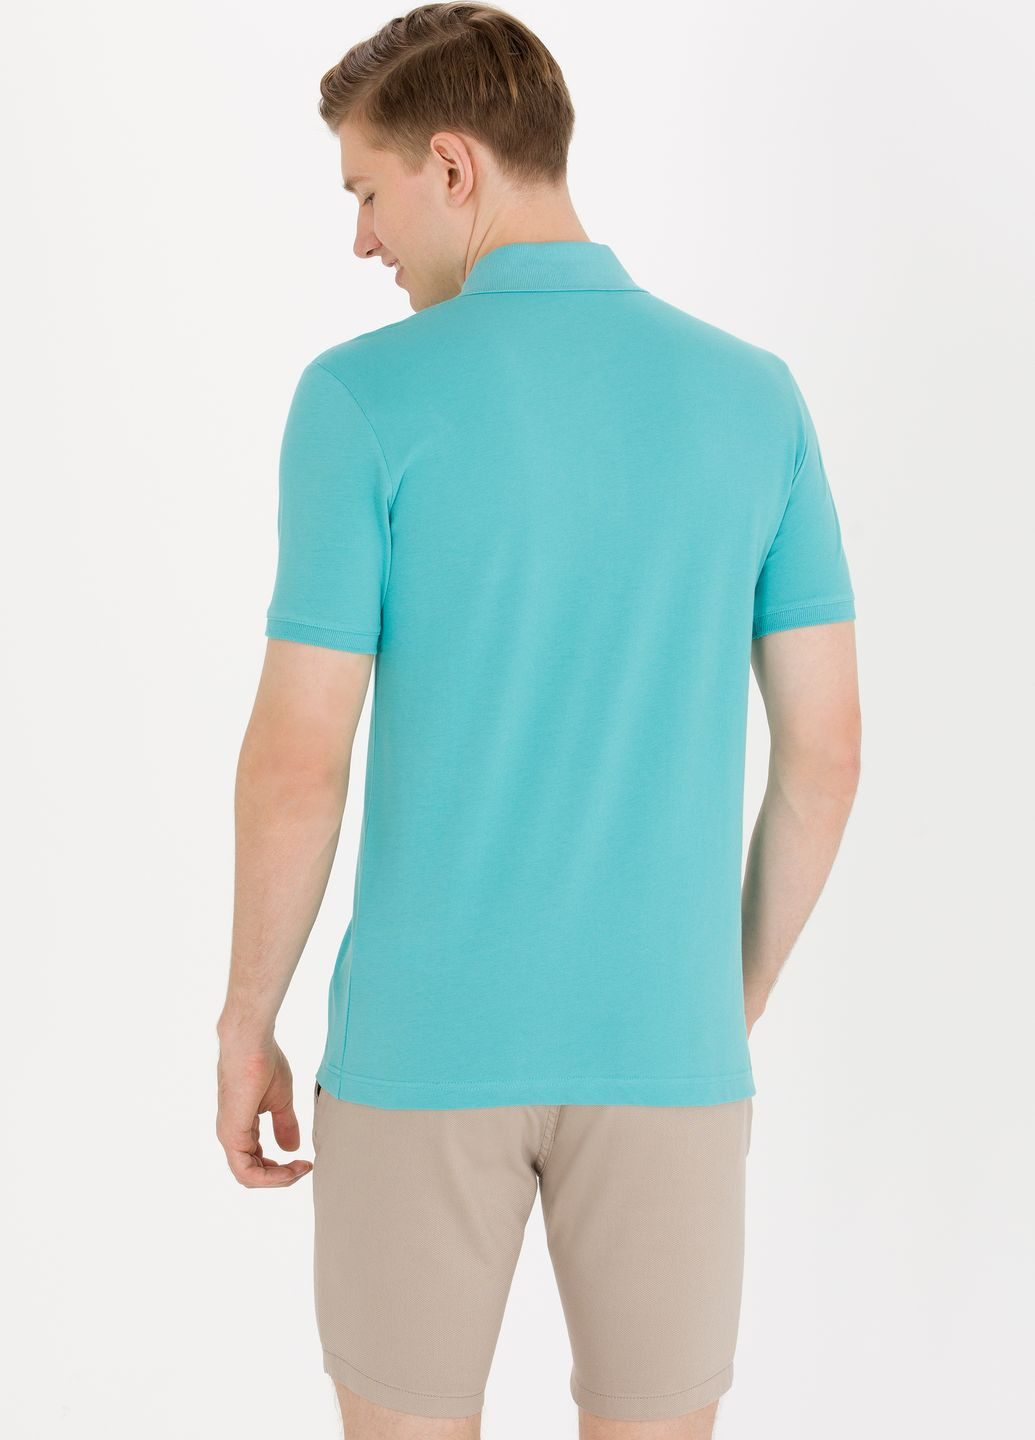 Мятная футболка-футболка поло мужское для мужчин U.S. Polo Assn.